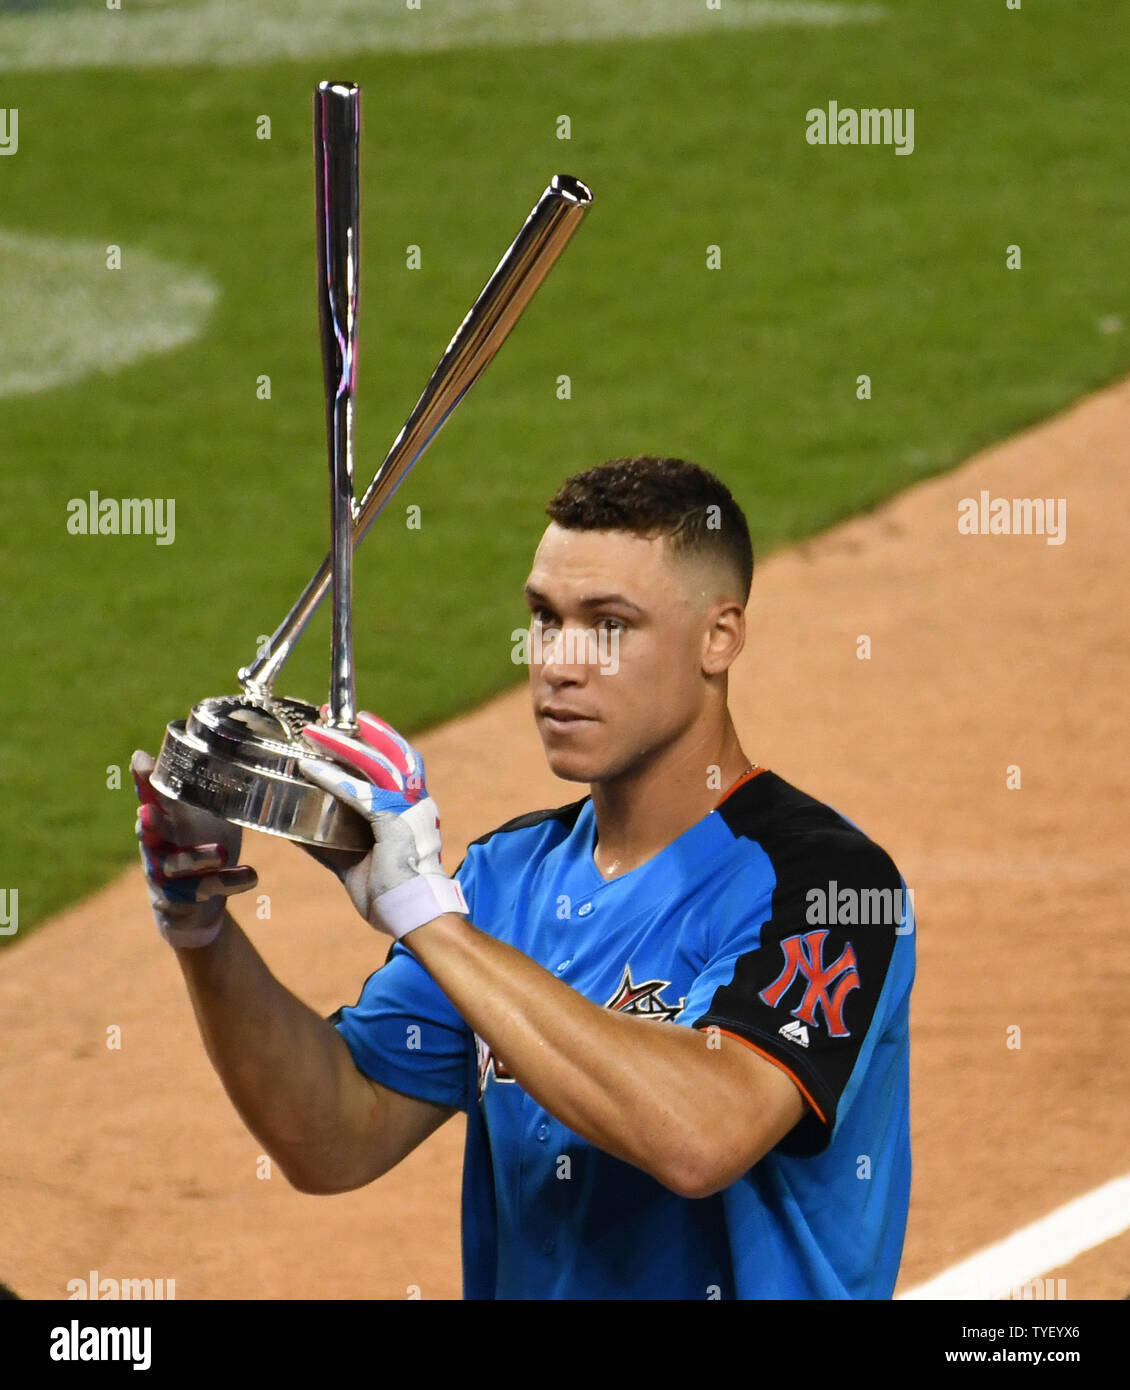 PHOTOS: Aaron Judge wins 2017 MLB All-Star Home Run Derby